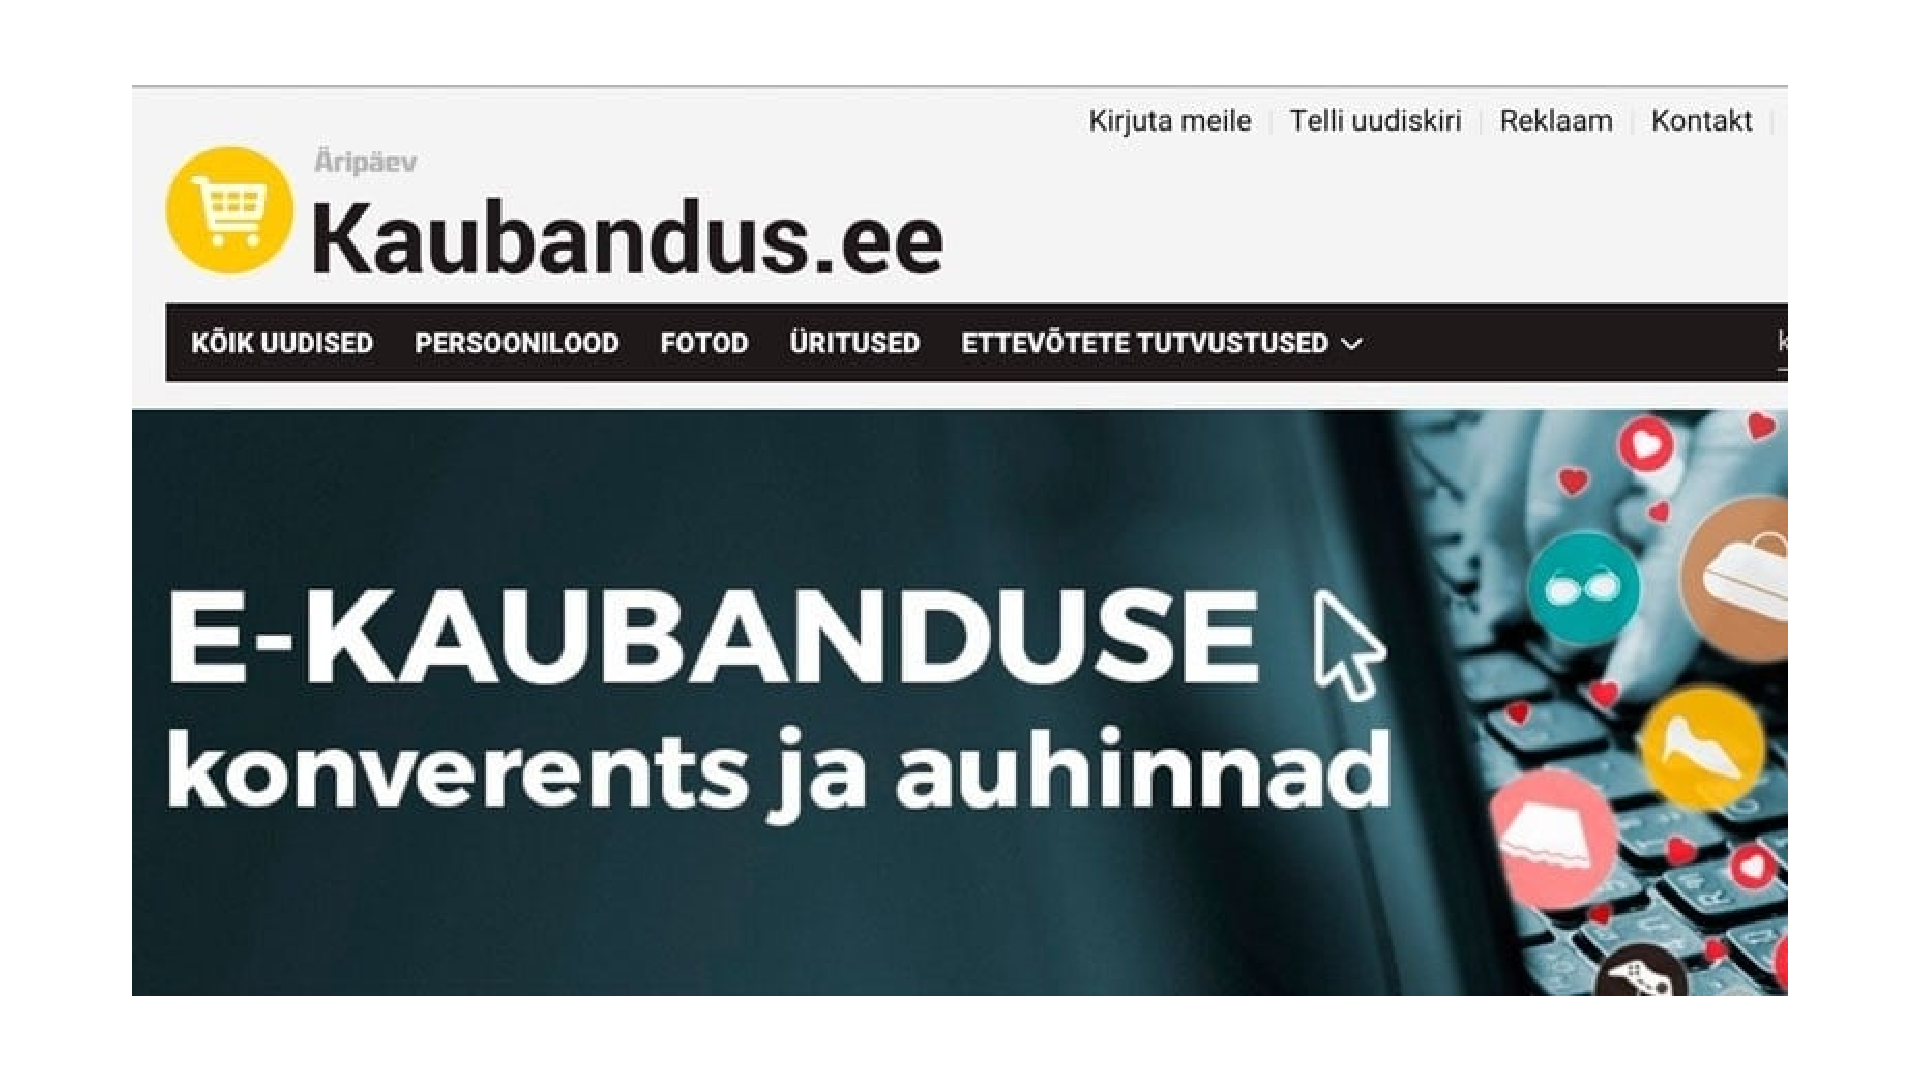 Screen shot of Estonian award website